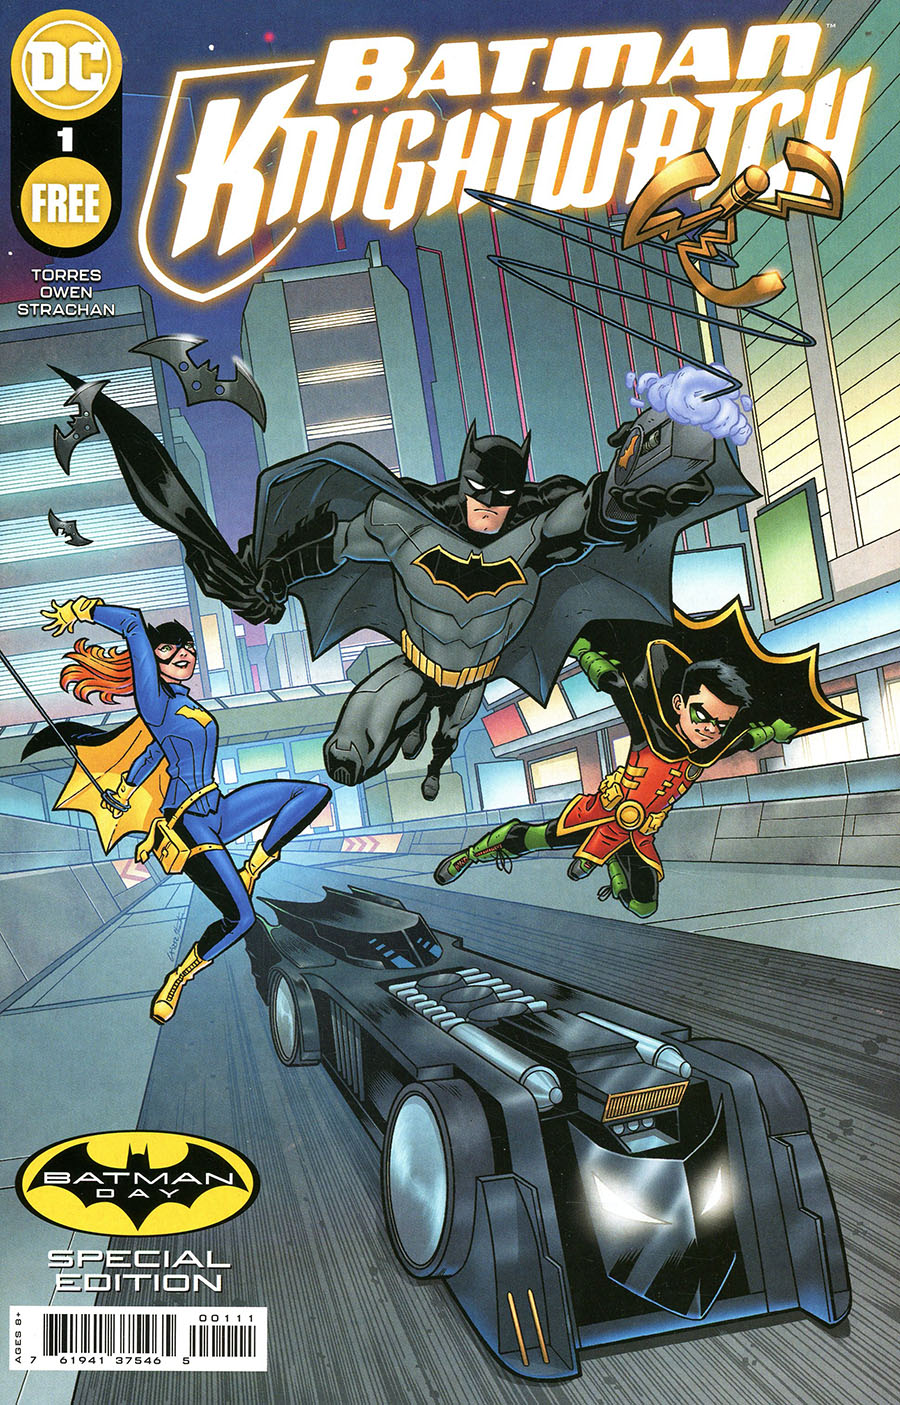 Batman Knightwatch Bat-Tech Batman Day Special Edition #1 - FREE - Limit 1 Per Customer